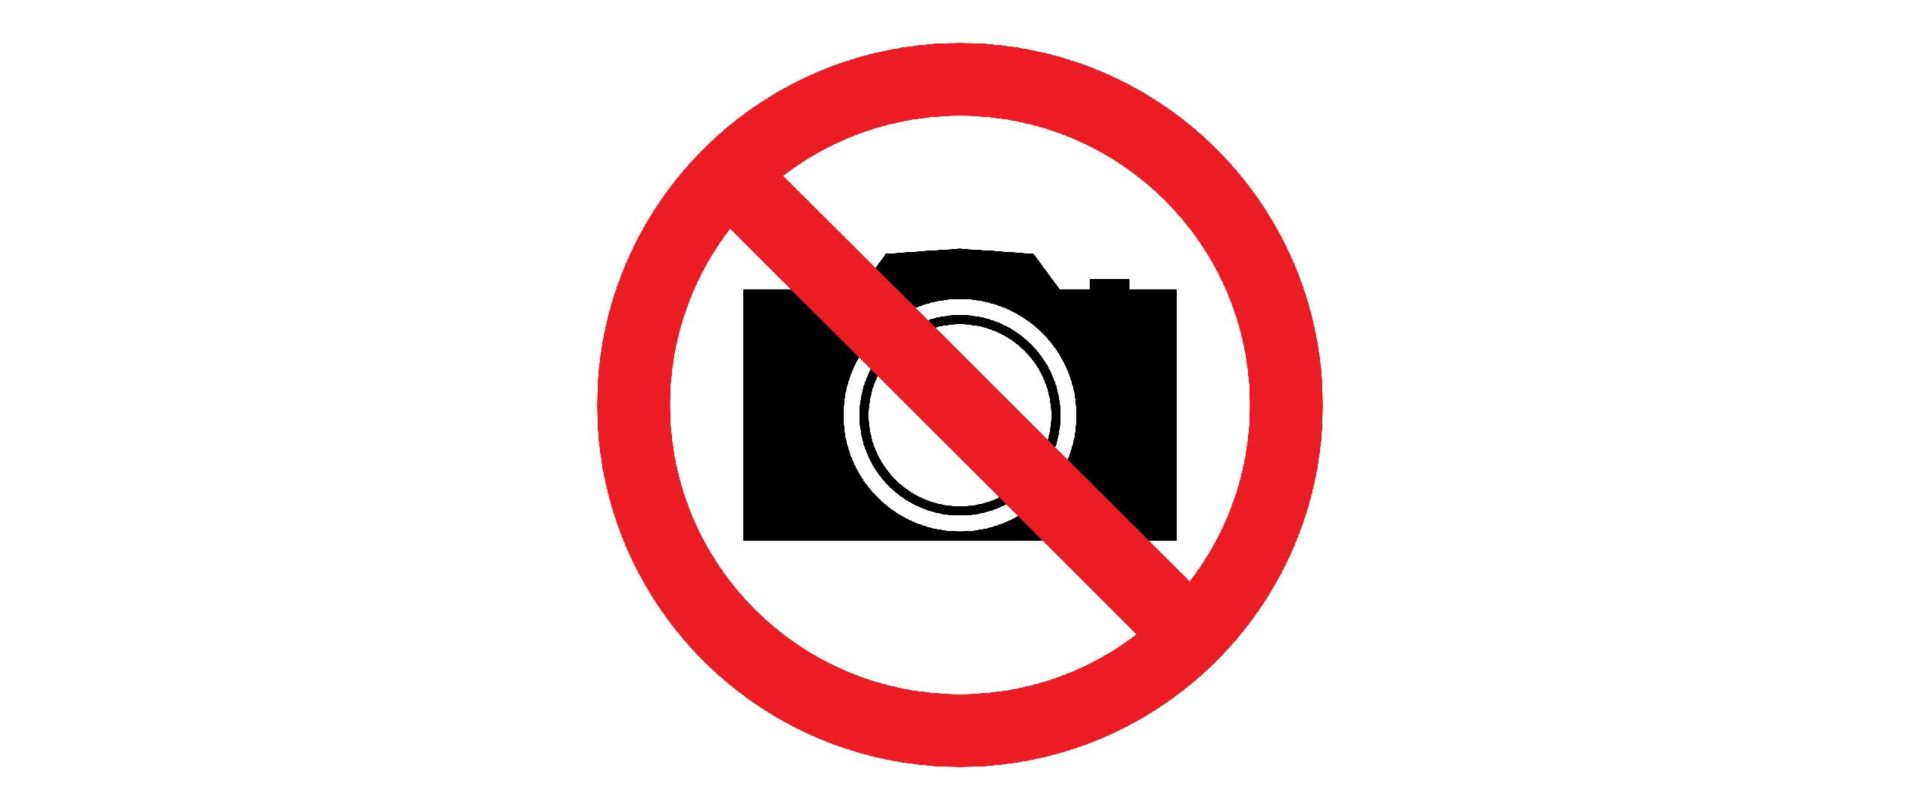 Знак запрета фотосъёмки